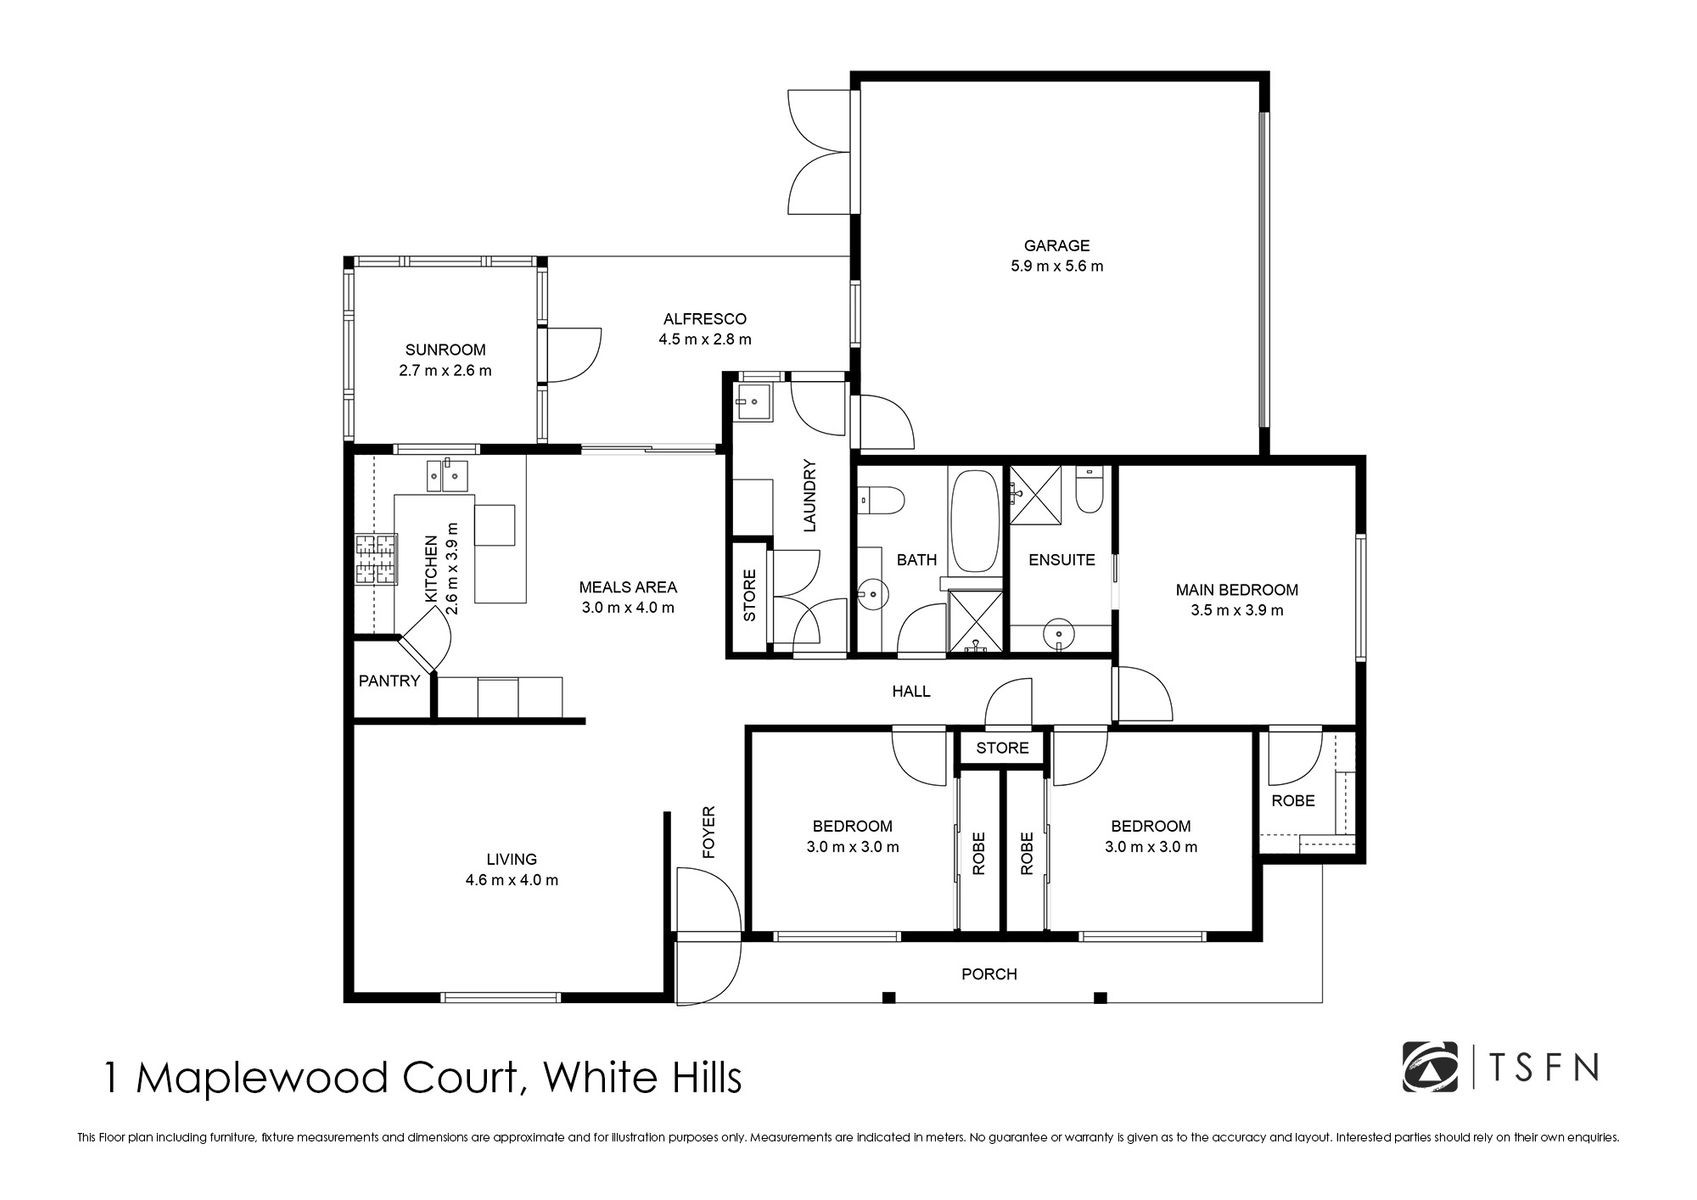 1 Maplewood Court Floor Plan